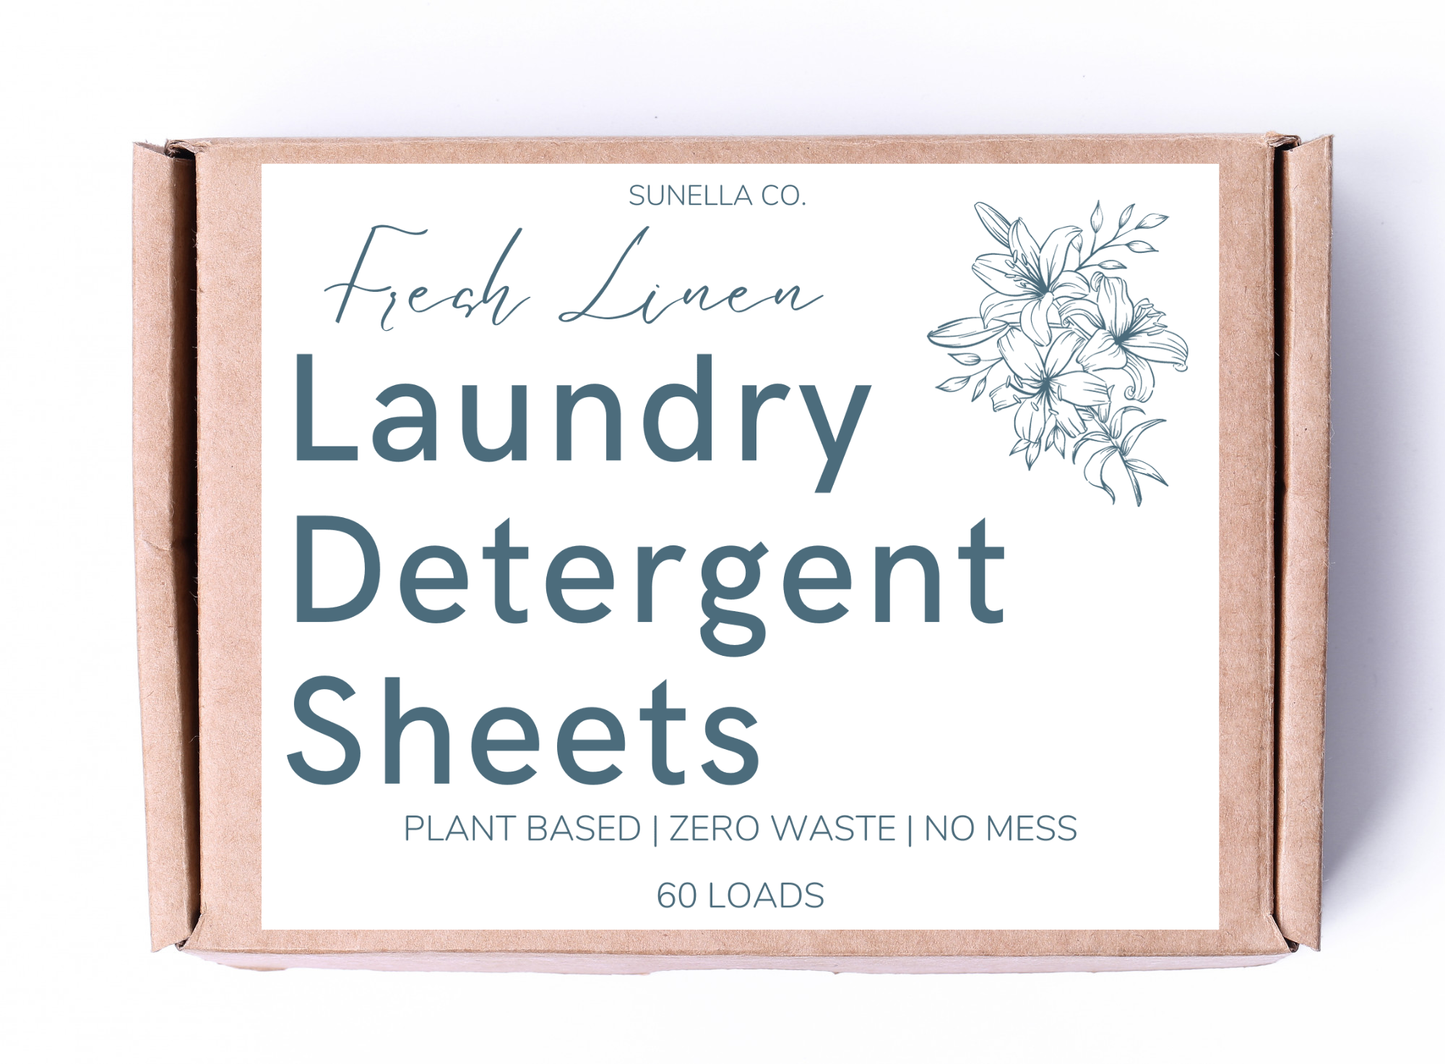 Laundry Detergent Sheets: Fresh Linen